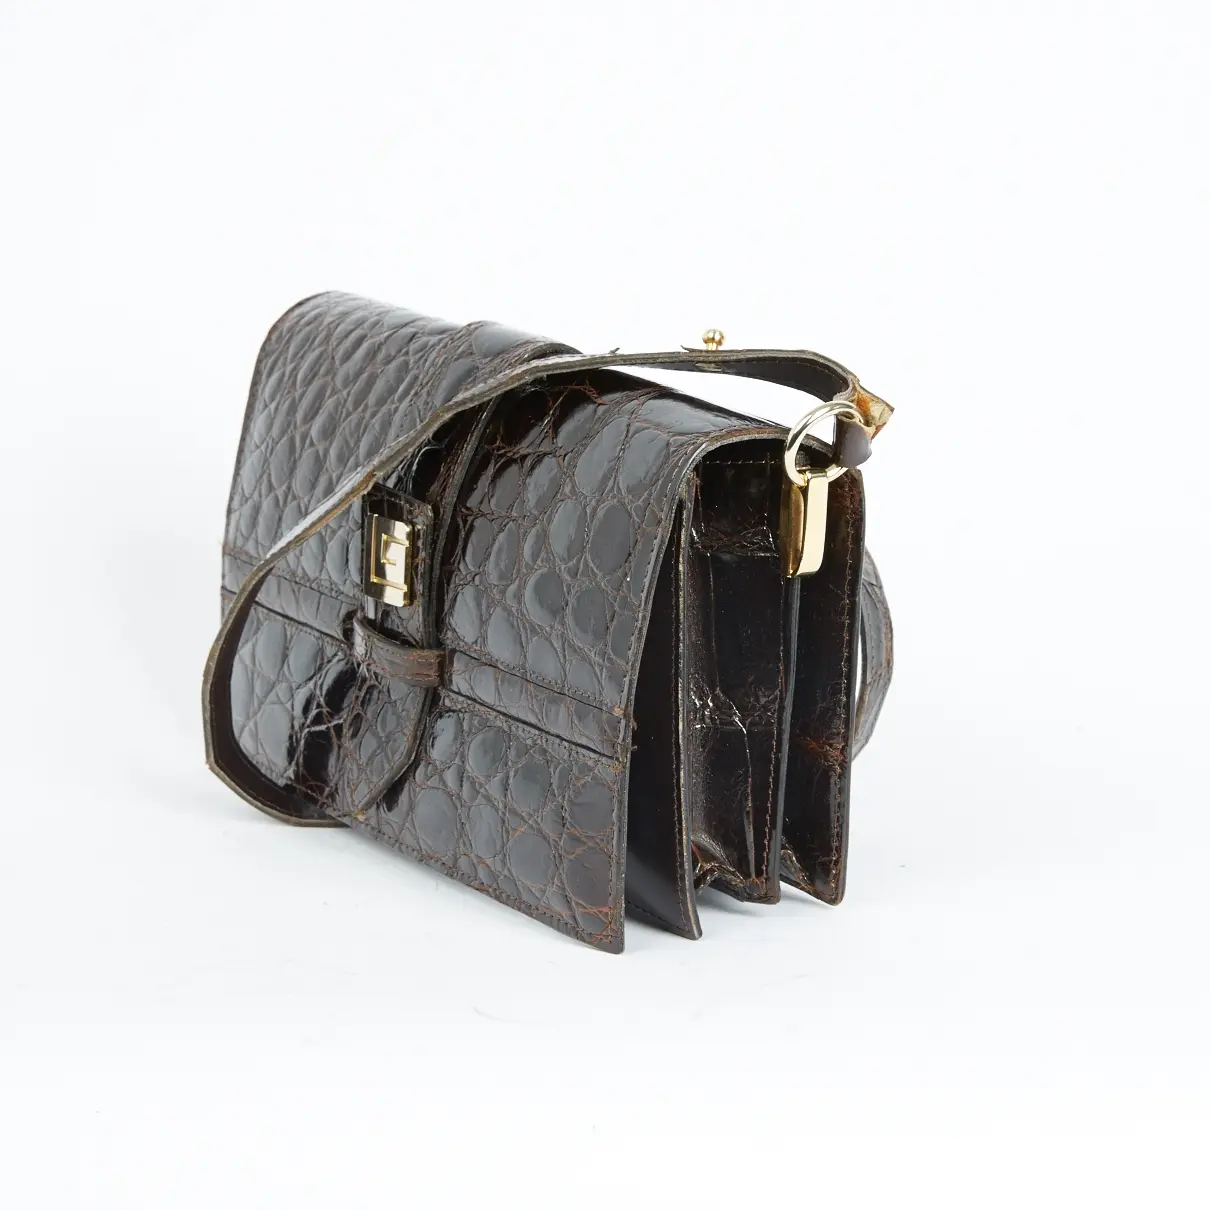 Guy Laroche Leather handbag for sale - Vintage